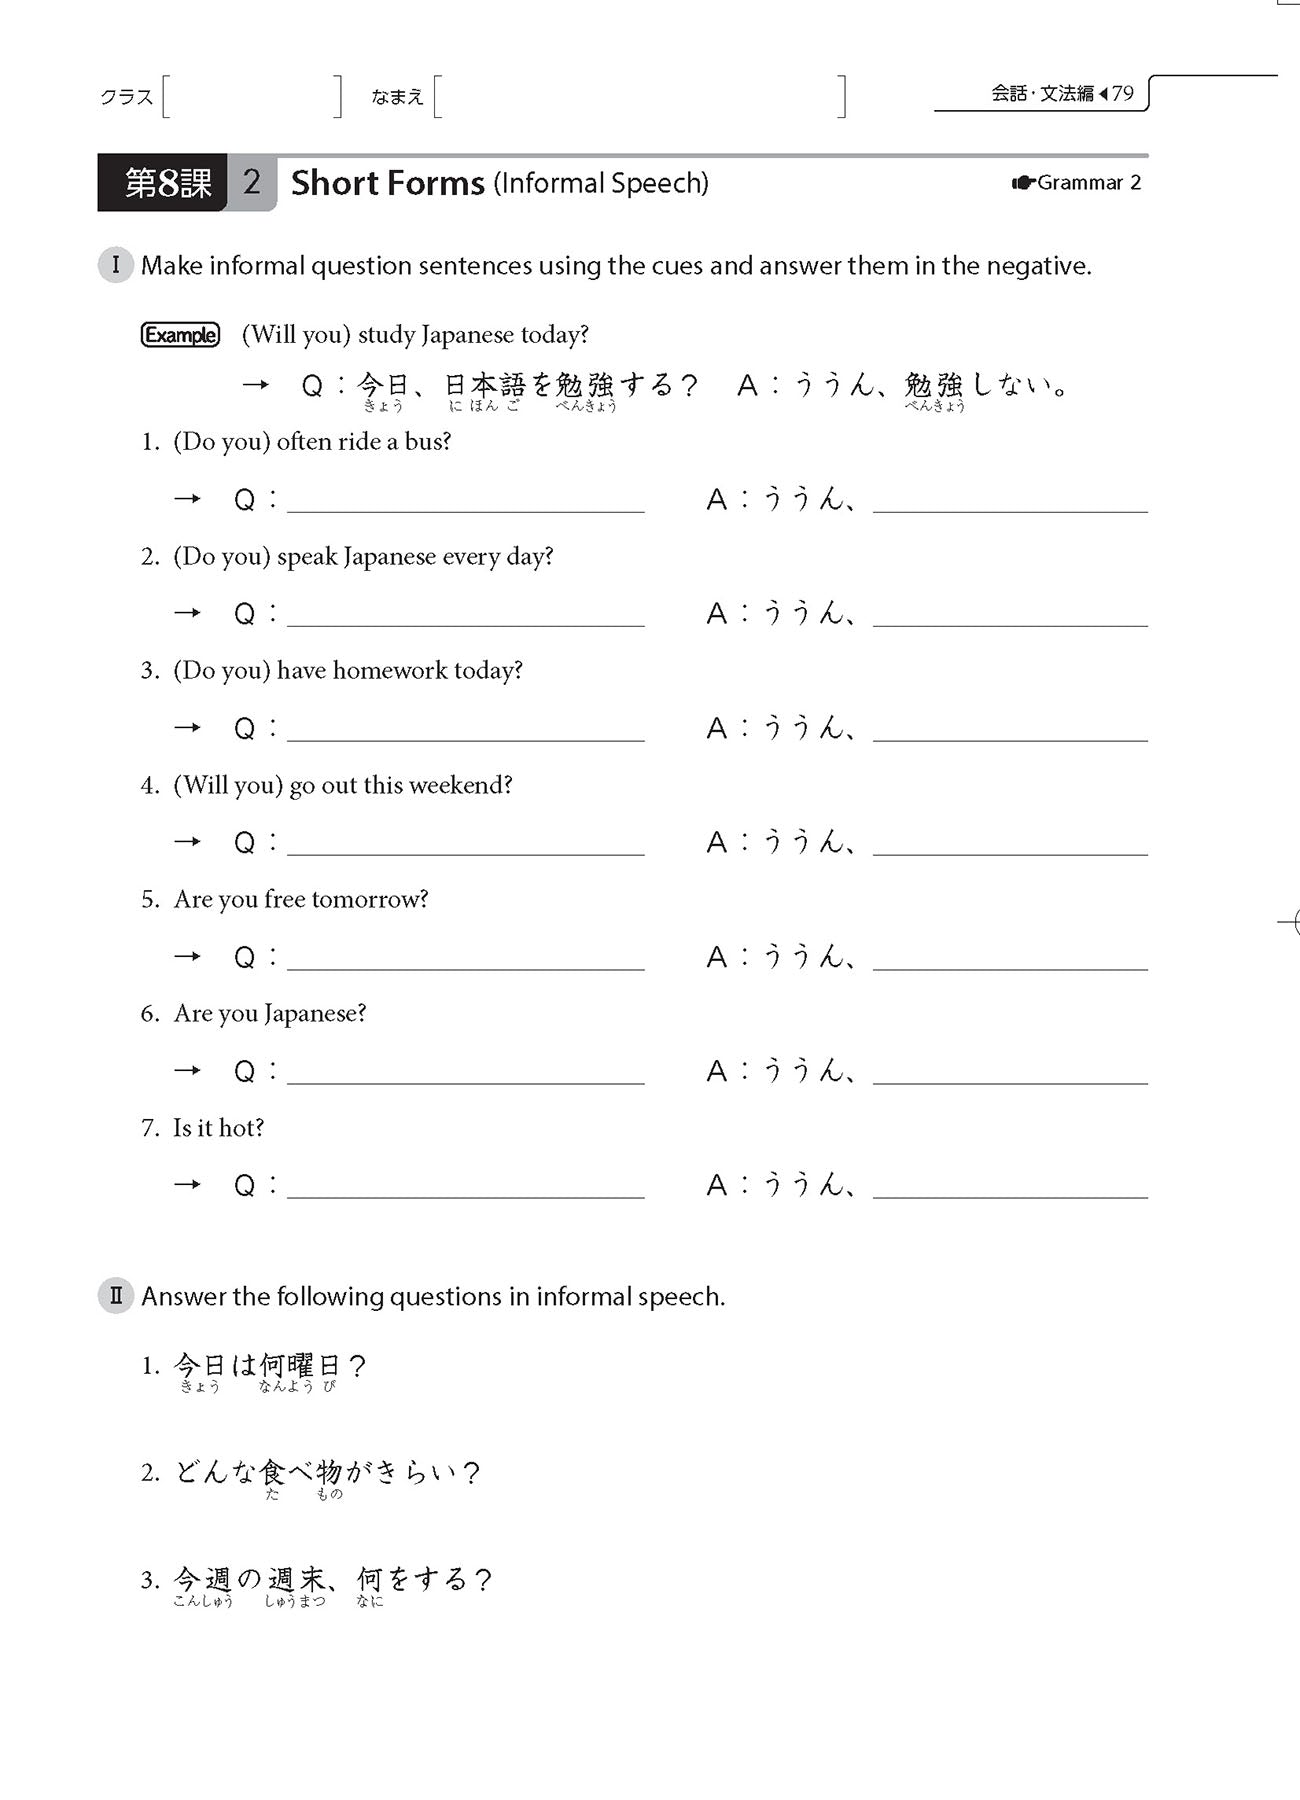 Genki Workbook 2 - Sample Page 3